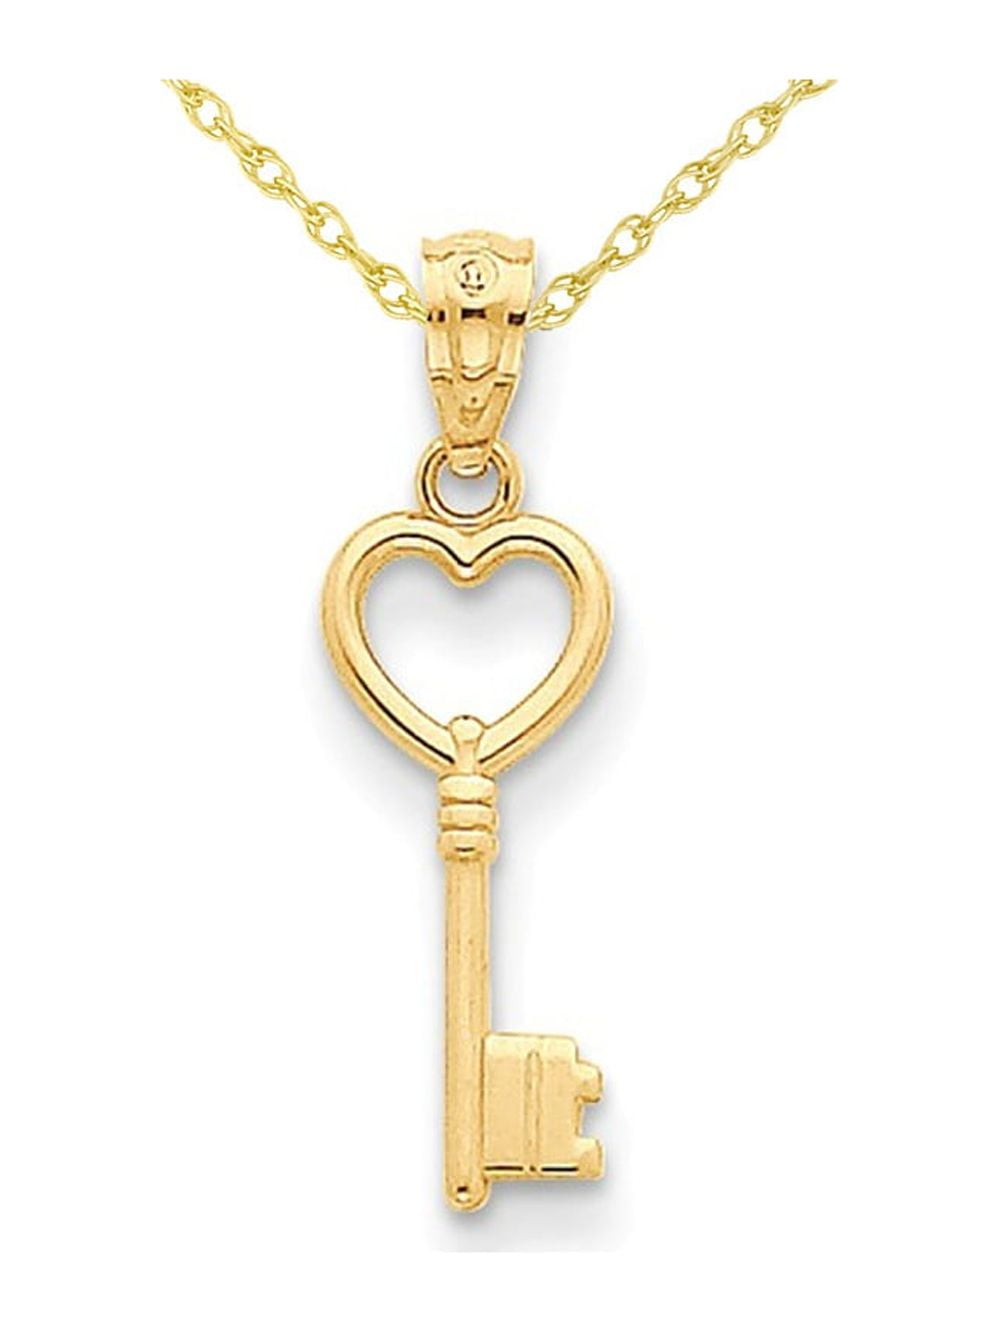 Gold Heart Key Necklace Open Heart Key Pendant 14K Gold 